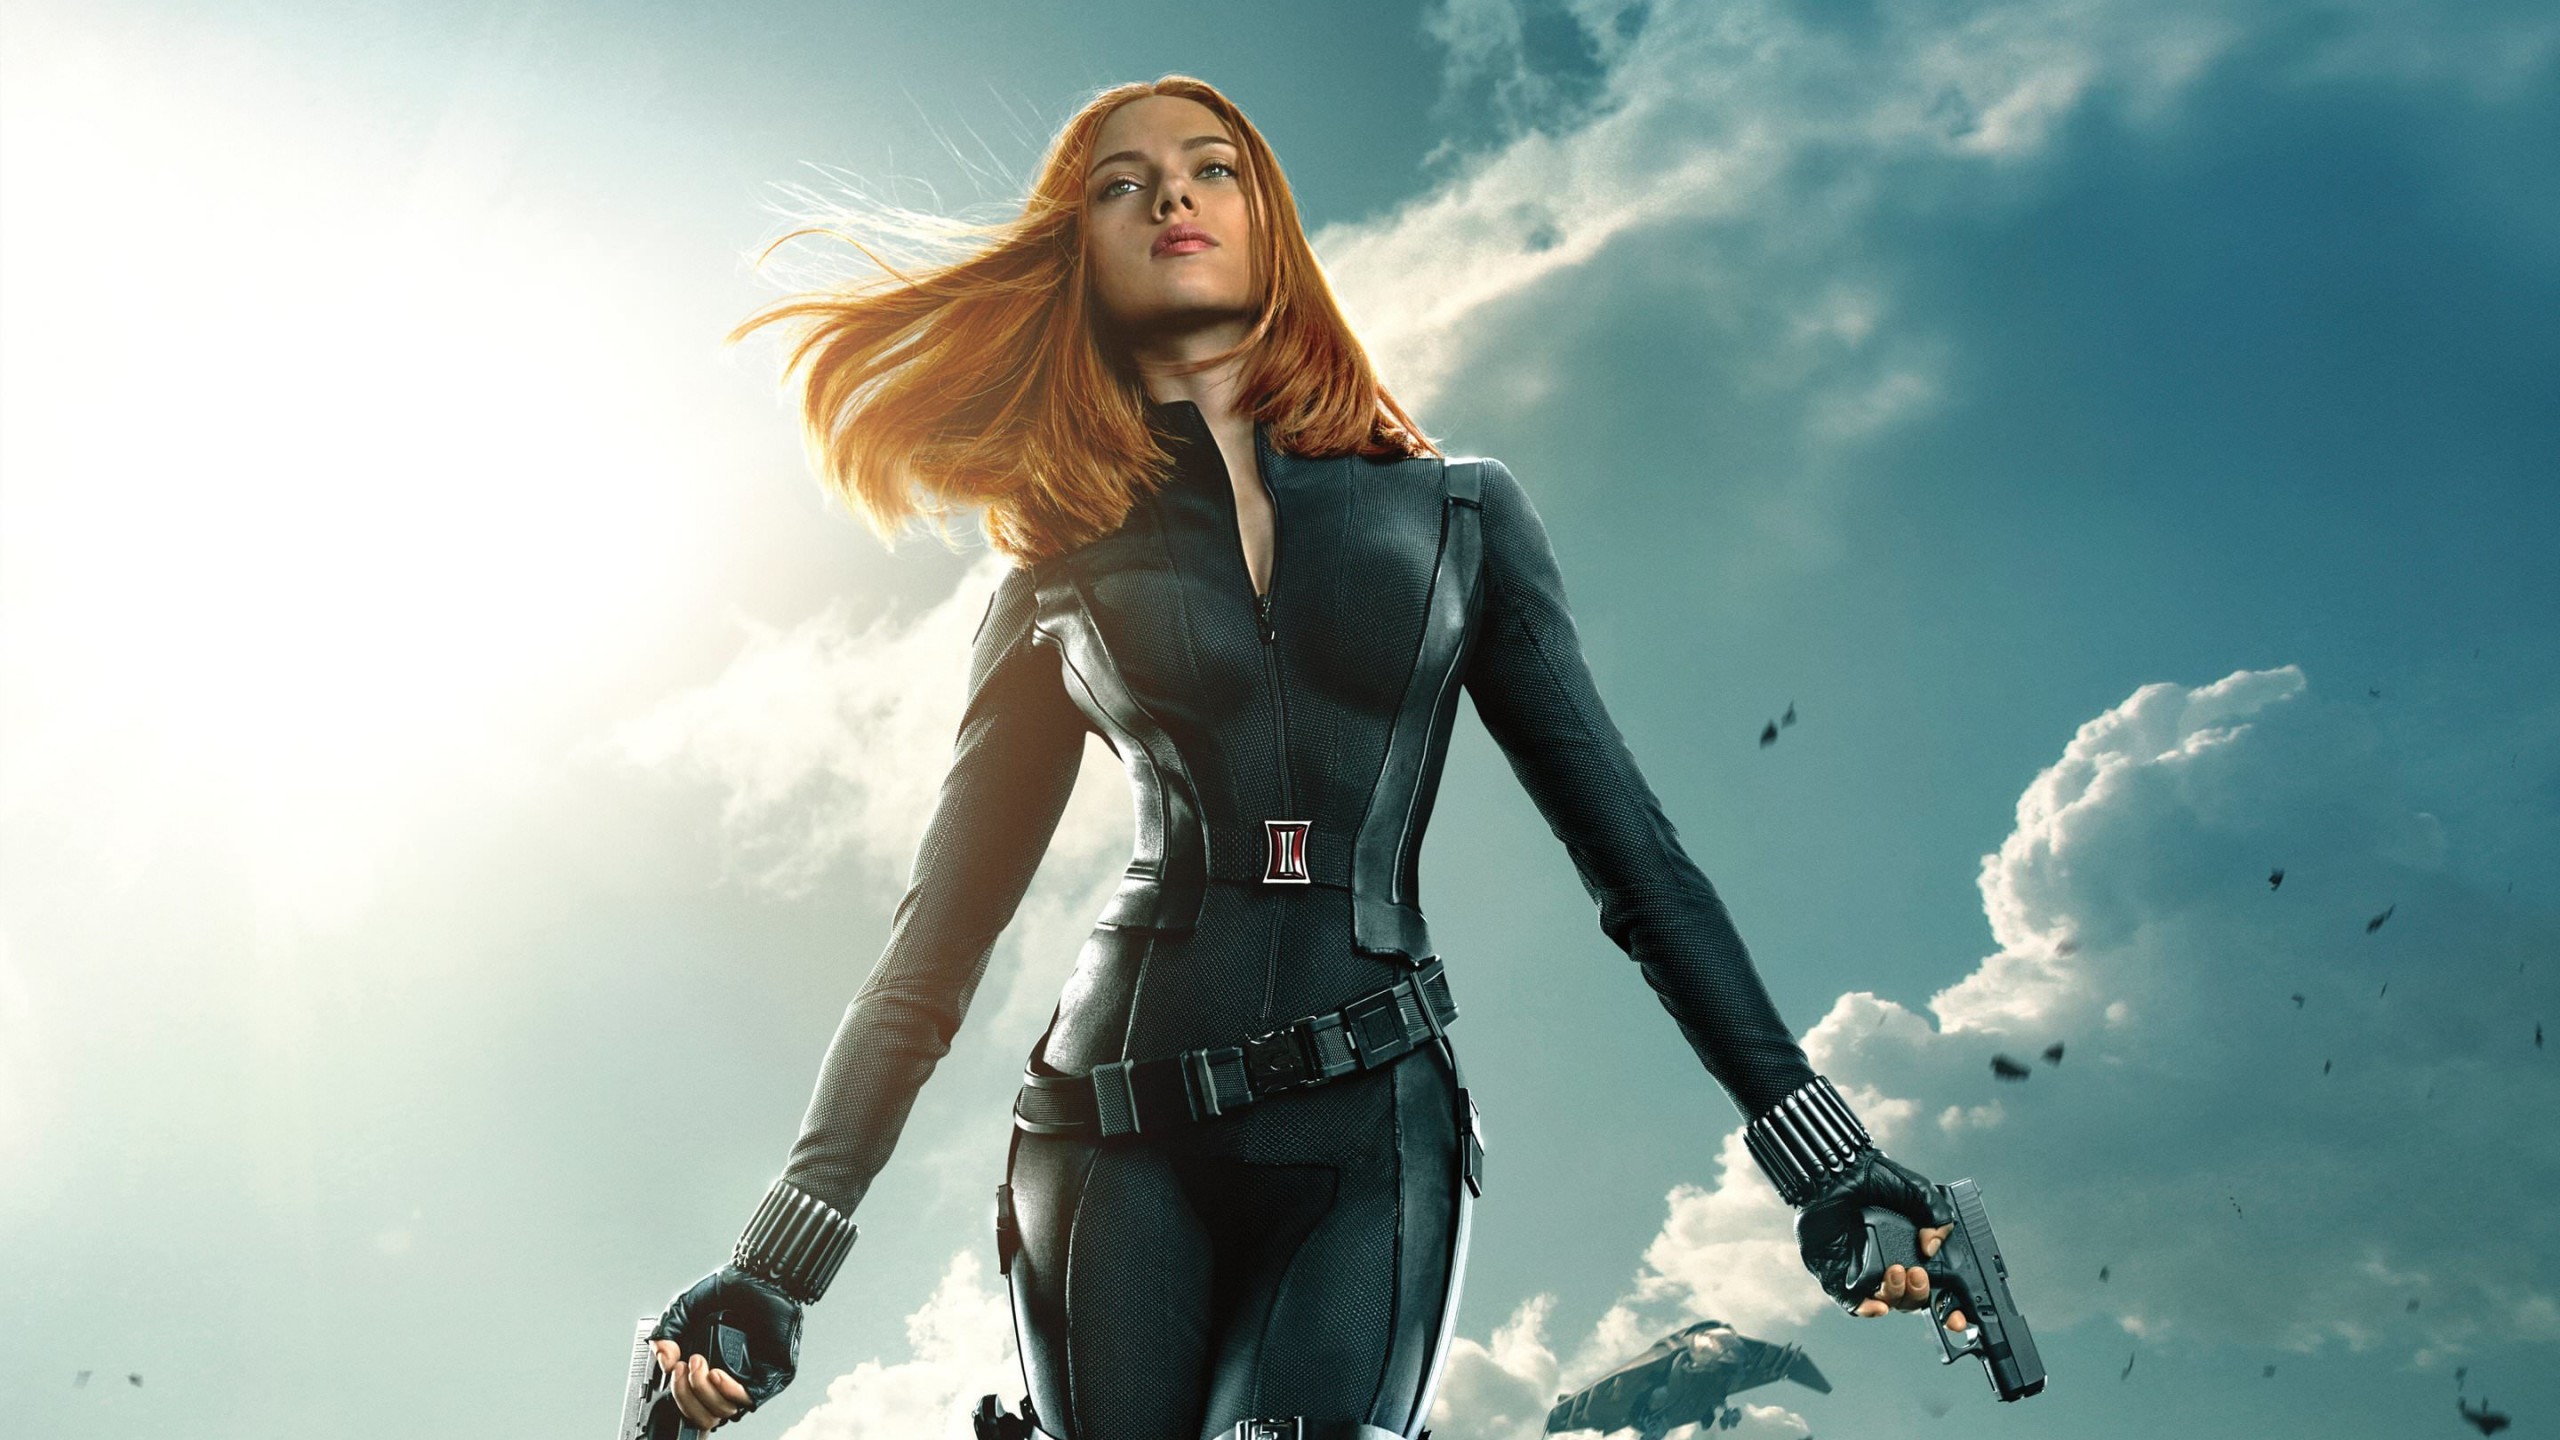 Scarlett Johansson in "Captain America: The Winter Soldier" Wallpaper for Desktop 2560x1440